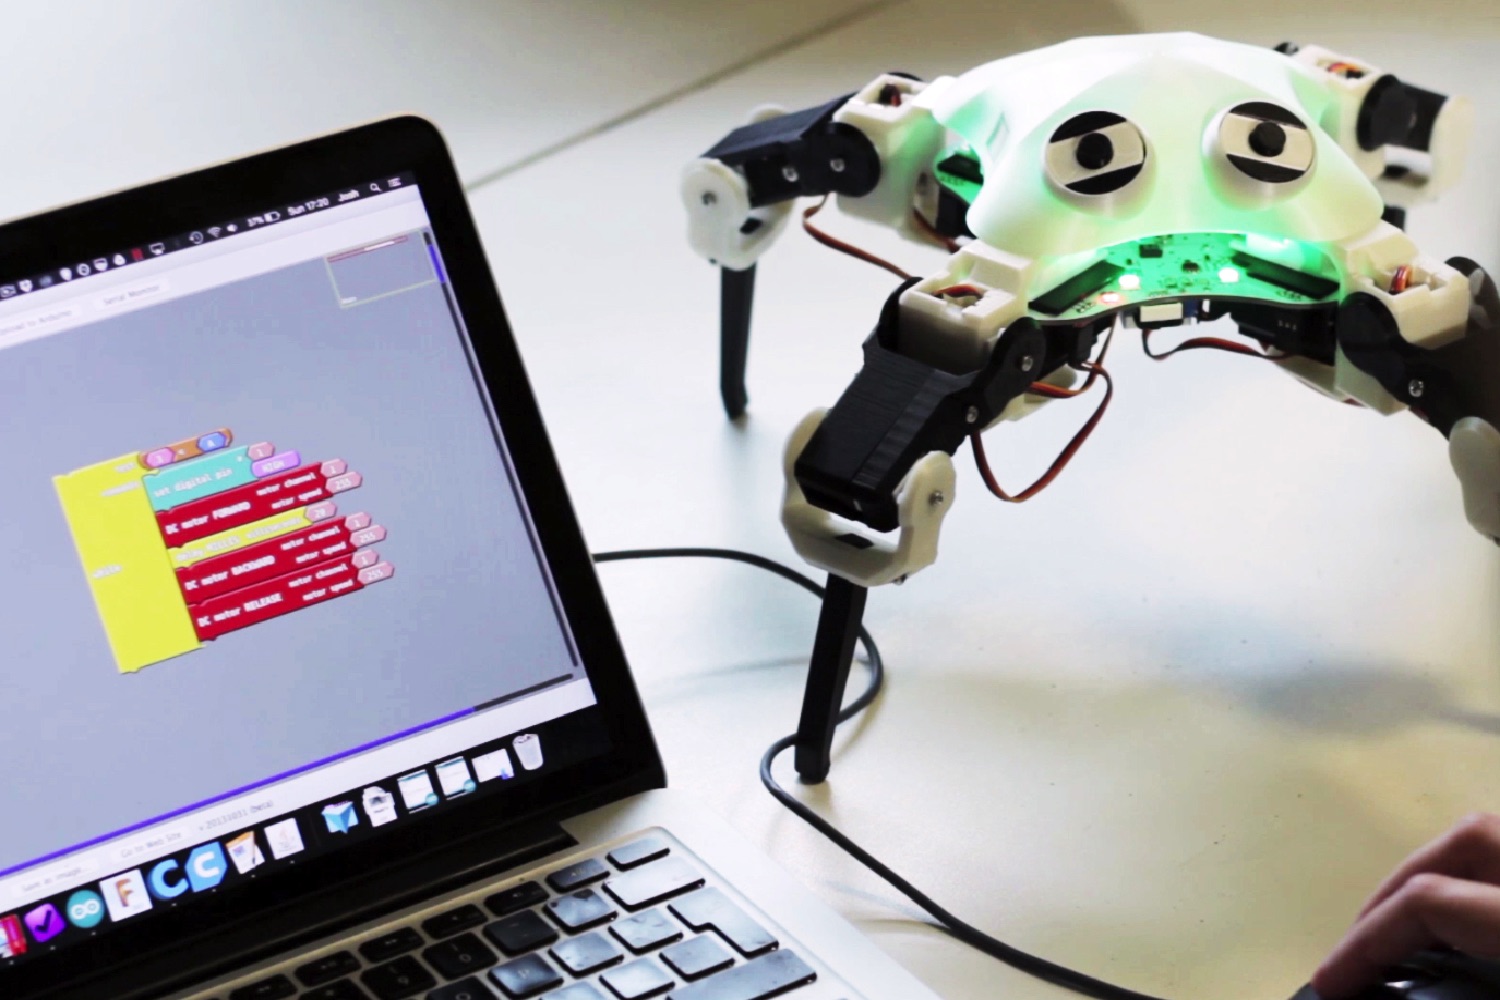 quadbot robot kickstarter image 6 and coding